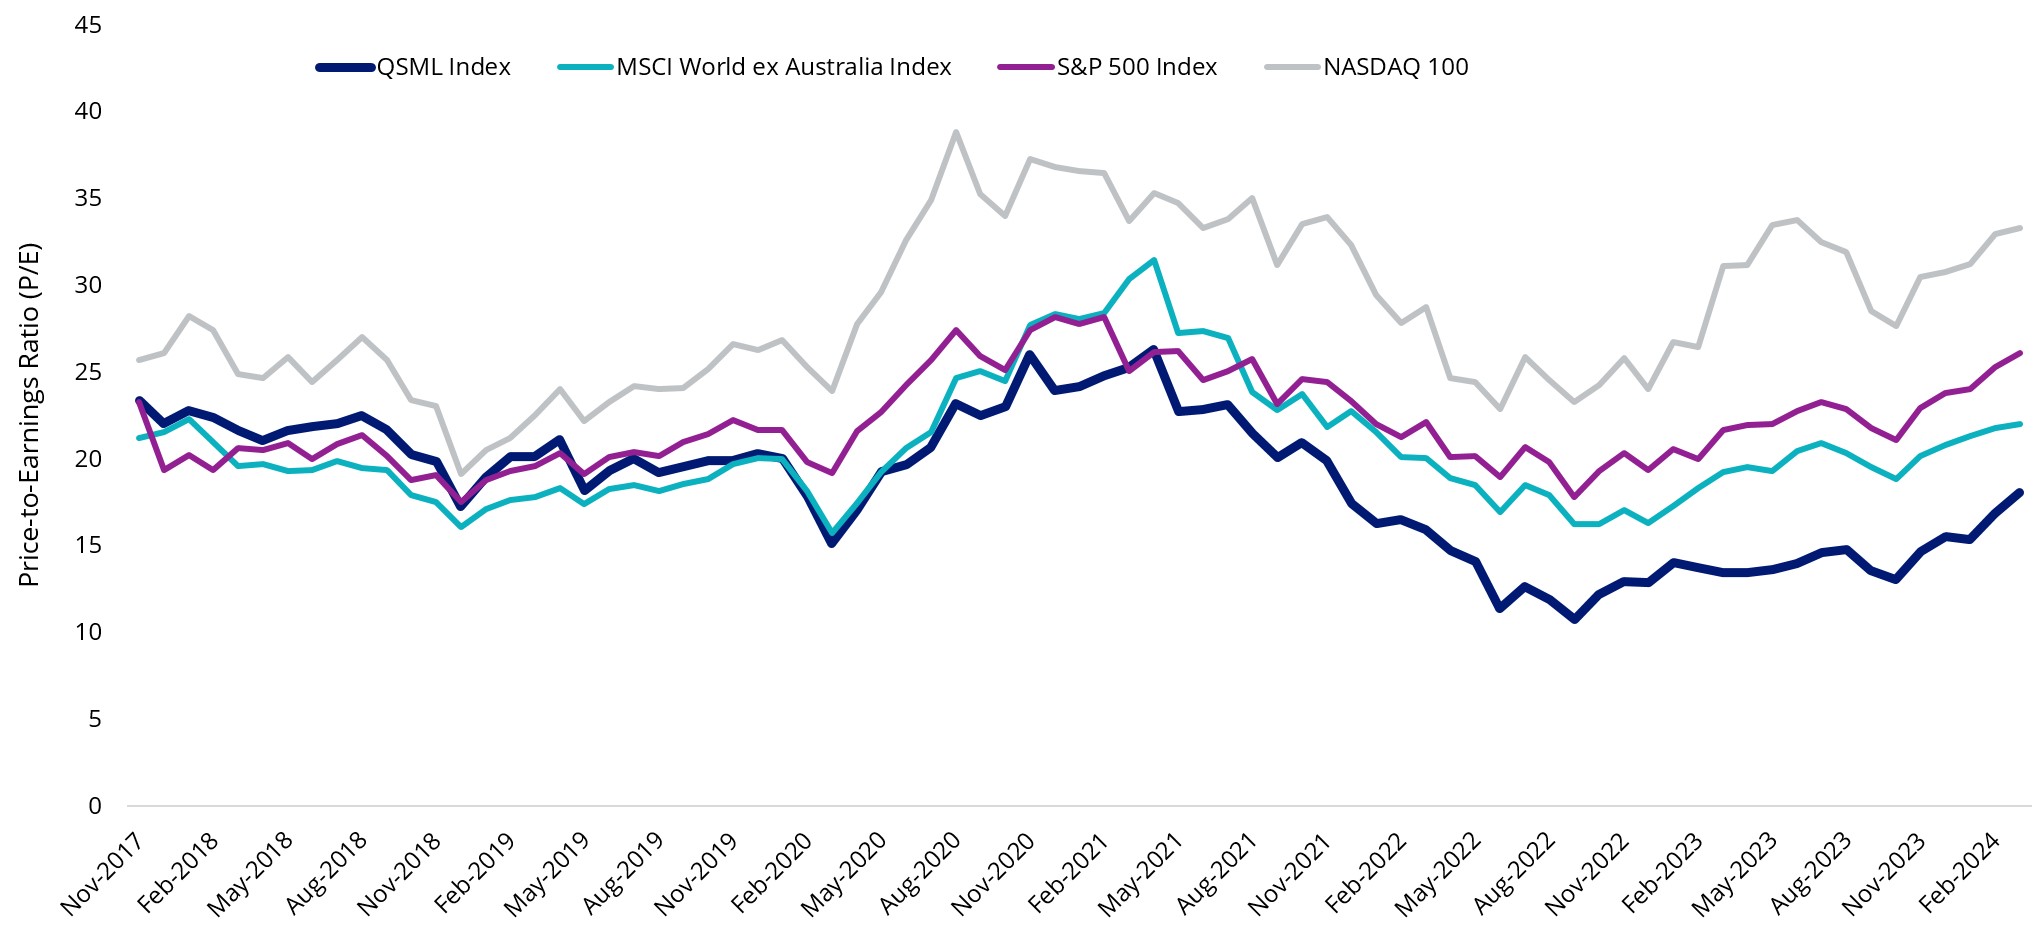 Price to equity (P/E) of QSML Index, MSCI World ex Australia Index and NASDAQ-100